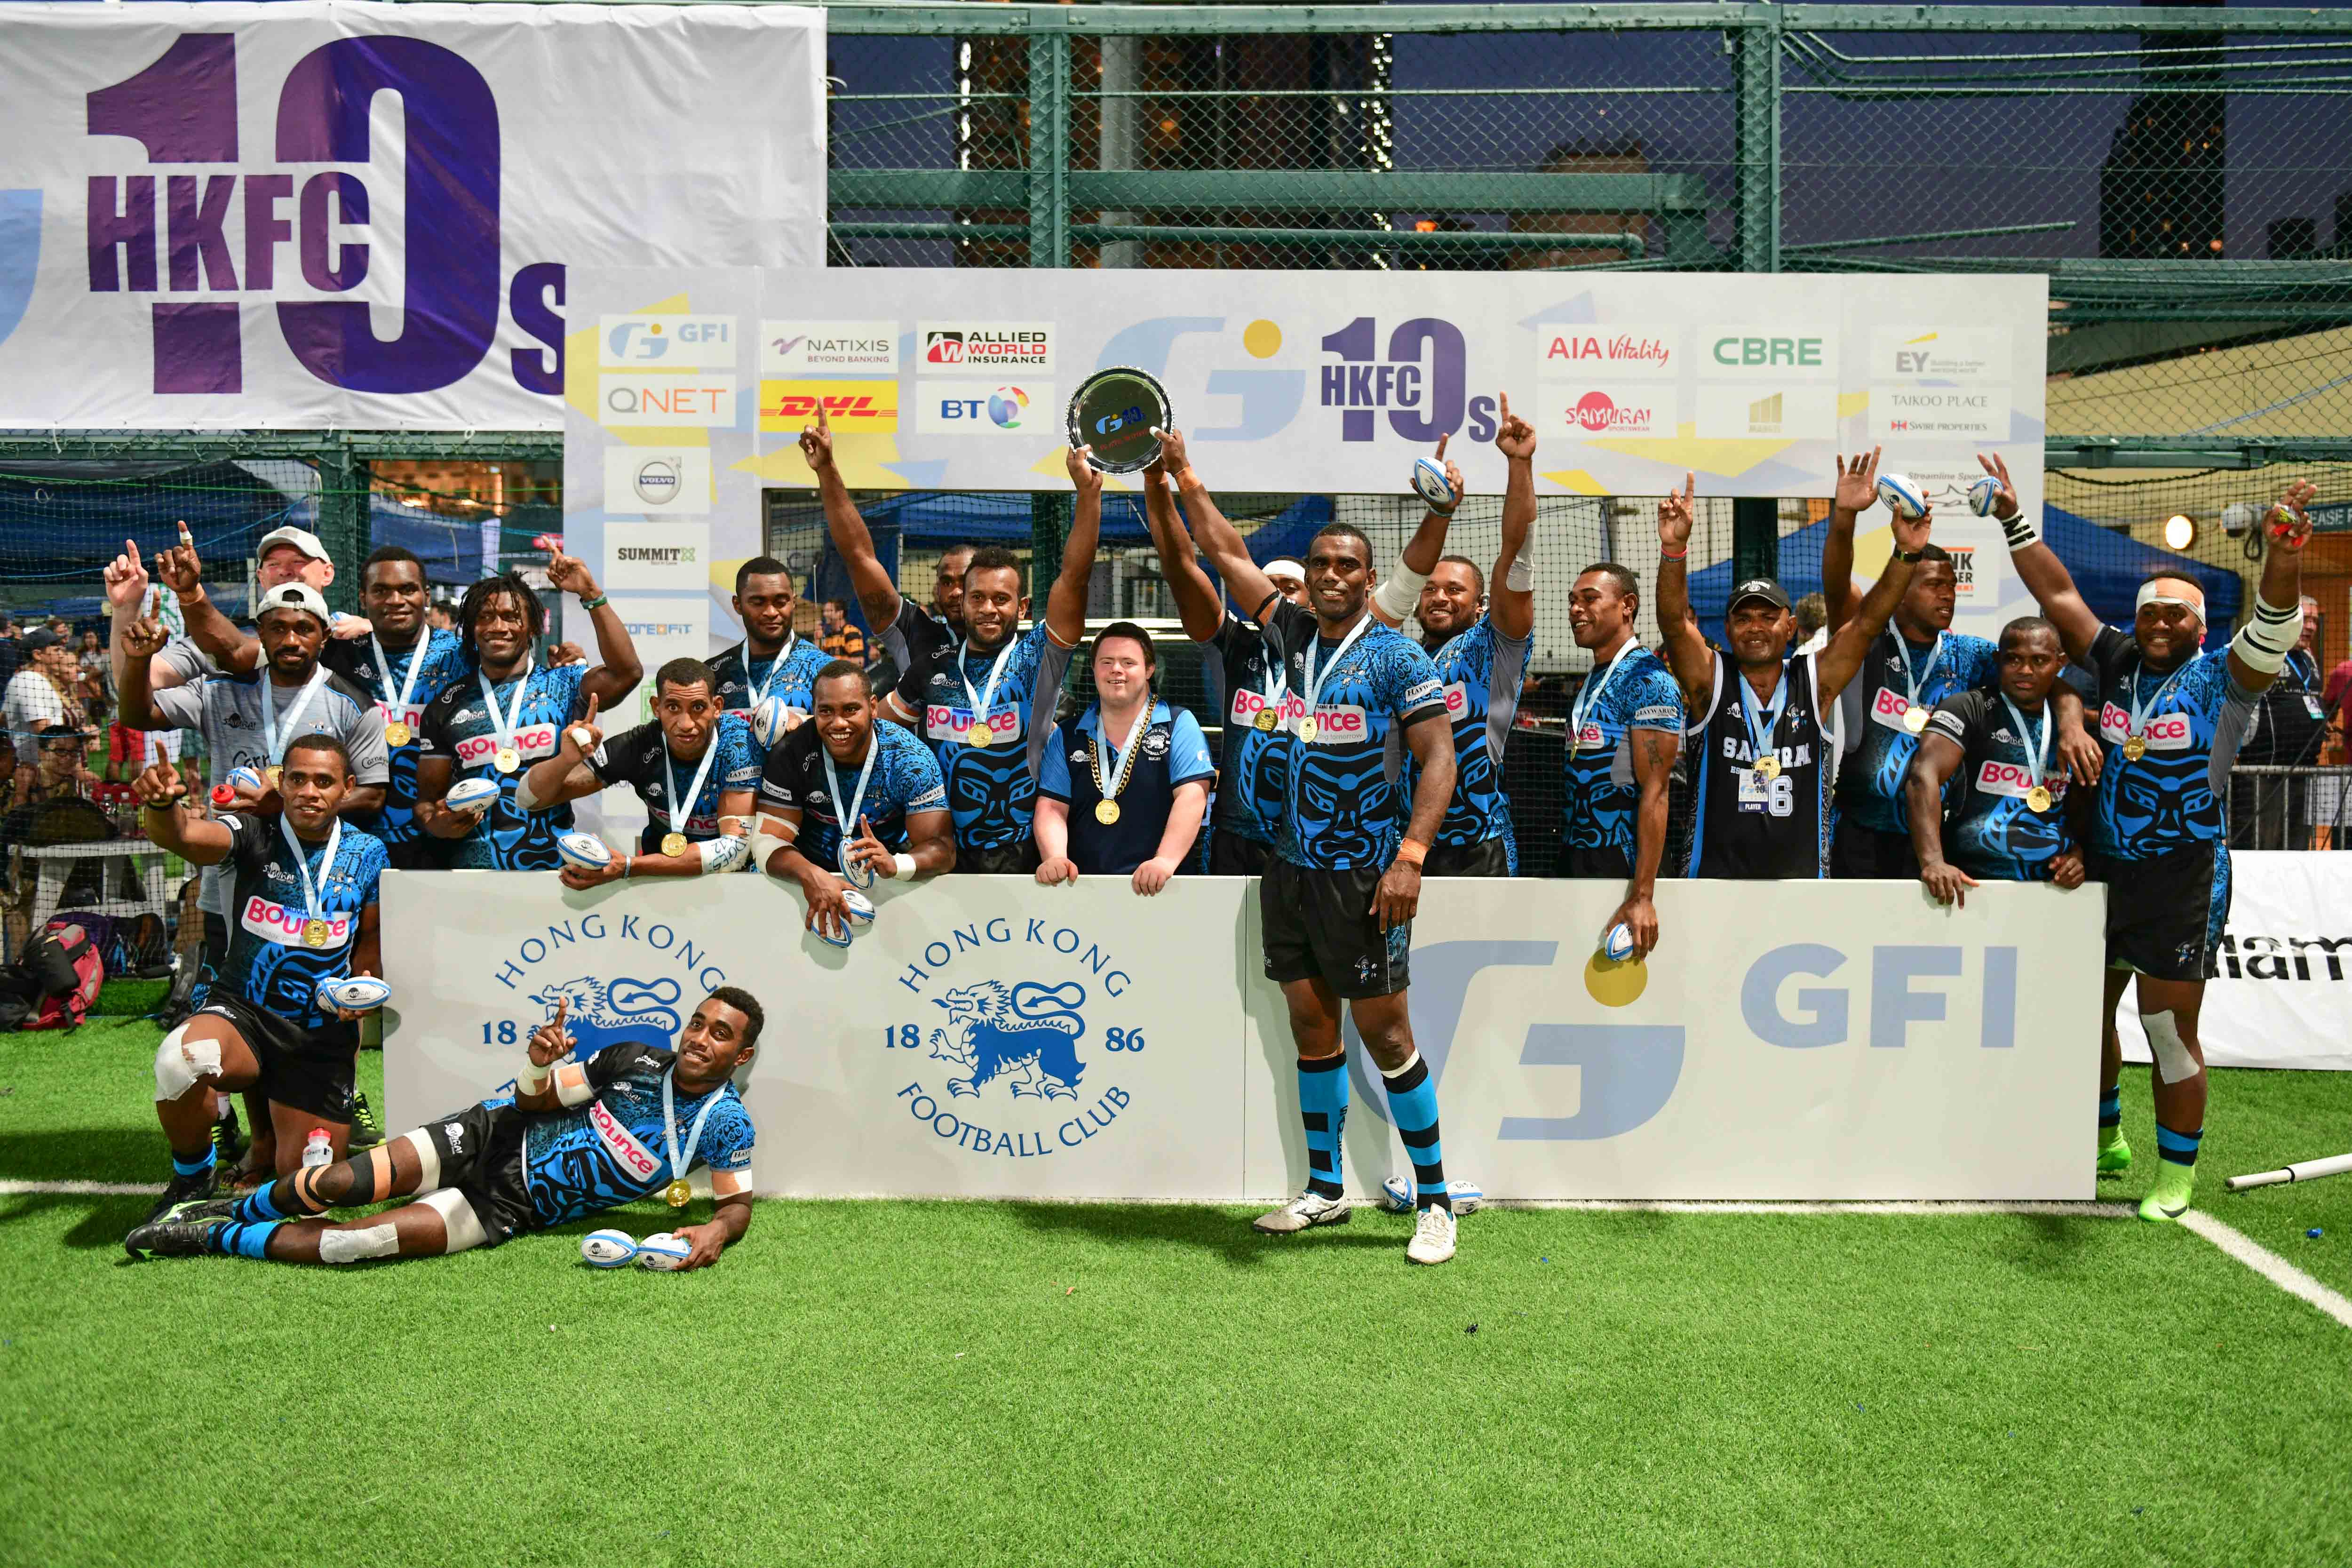 Samurai International, UBB Gavekal Gain Back-To-Back GFI HKFC 10s Titles Behind Fiji 7s Backs, Doddie Weir Shines